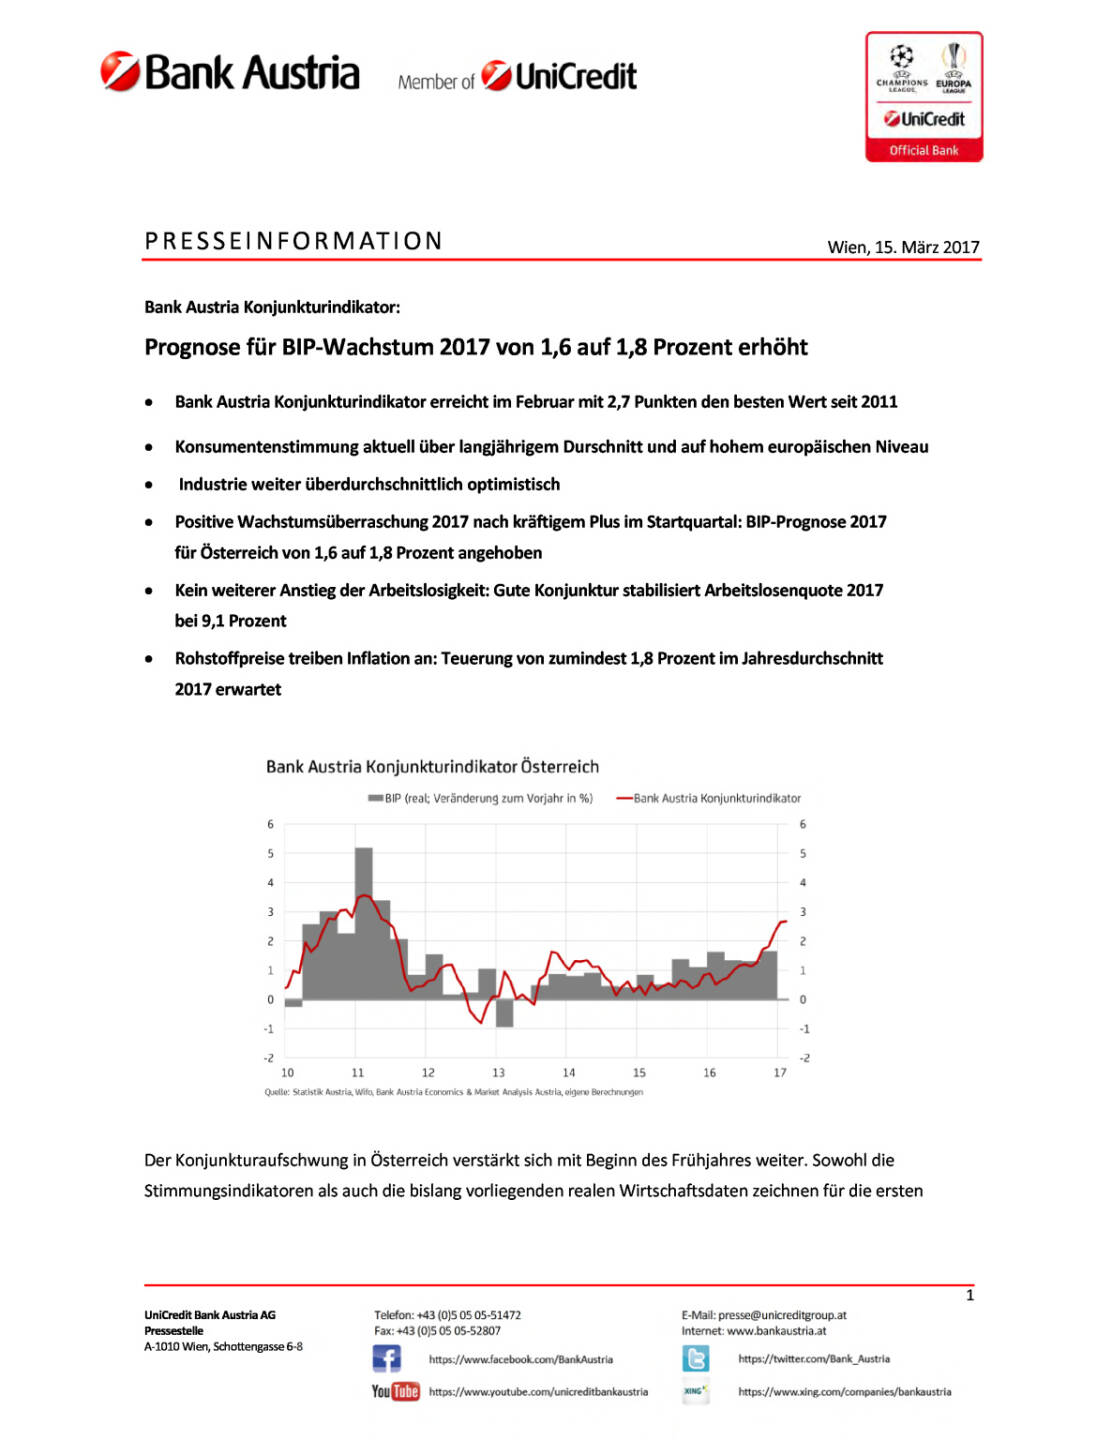 Bank Austria Konjunkturindikator: Prognose für BIP-Wachstum 2017 erhöht, Seite 1/6, komplettes Dokument unter http://boerse-social.com/static/uploads/file_2163_bank_austria_konjunkturindikator_prognose_fur_bip-wachstum_2017_erhoht.pdf